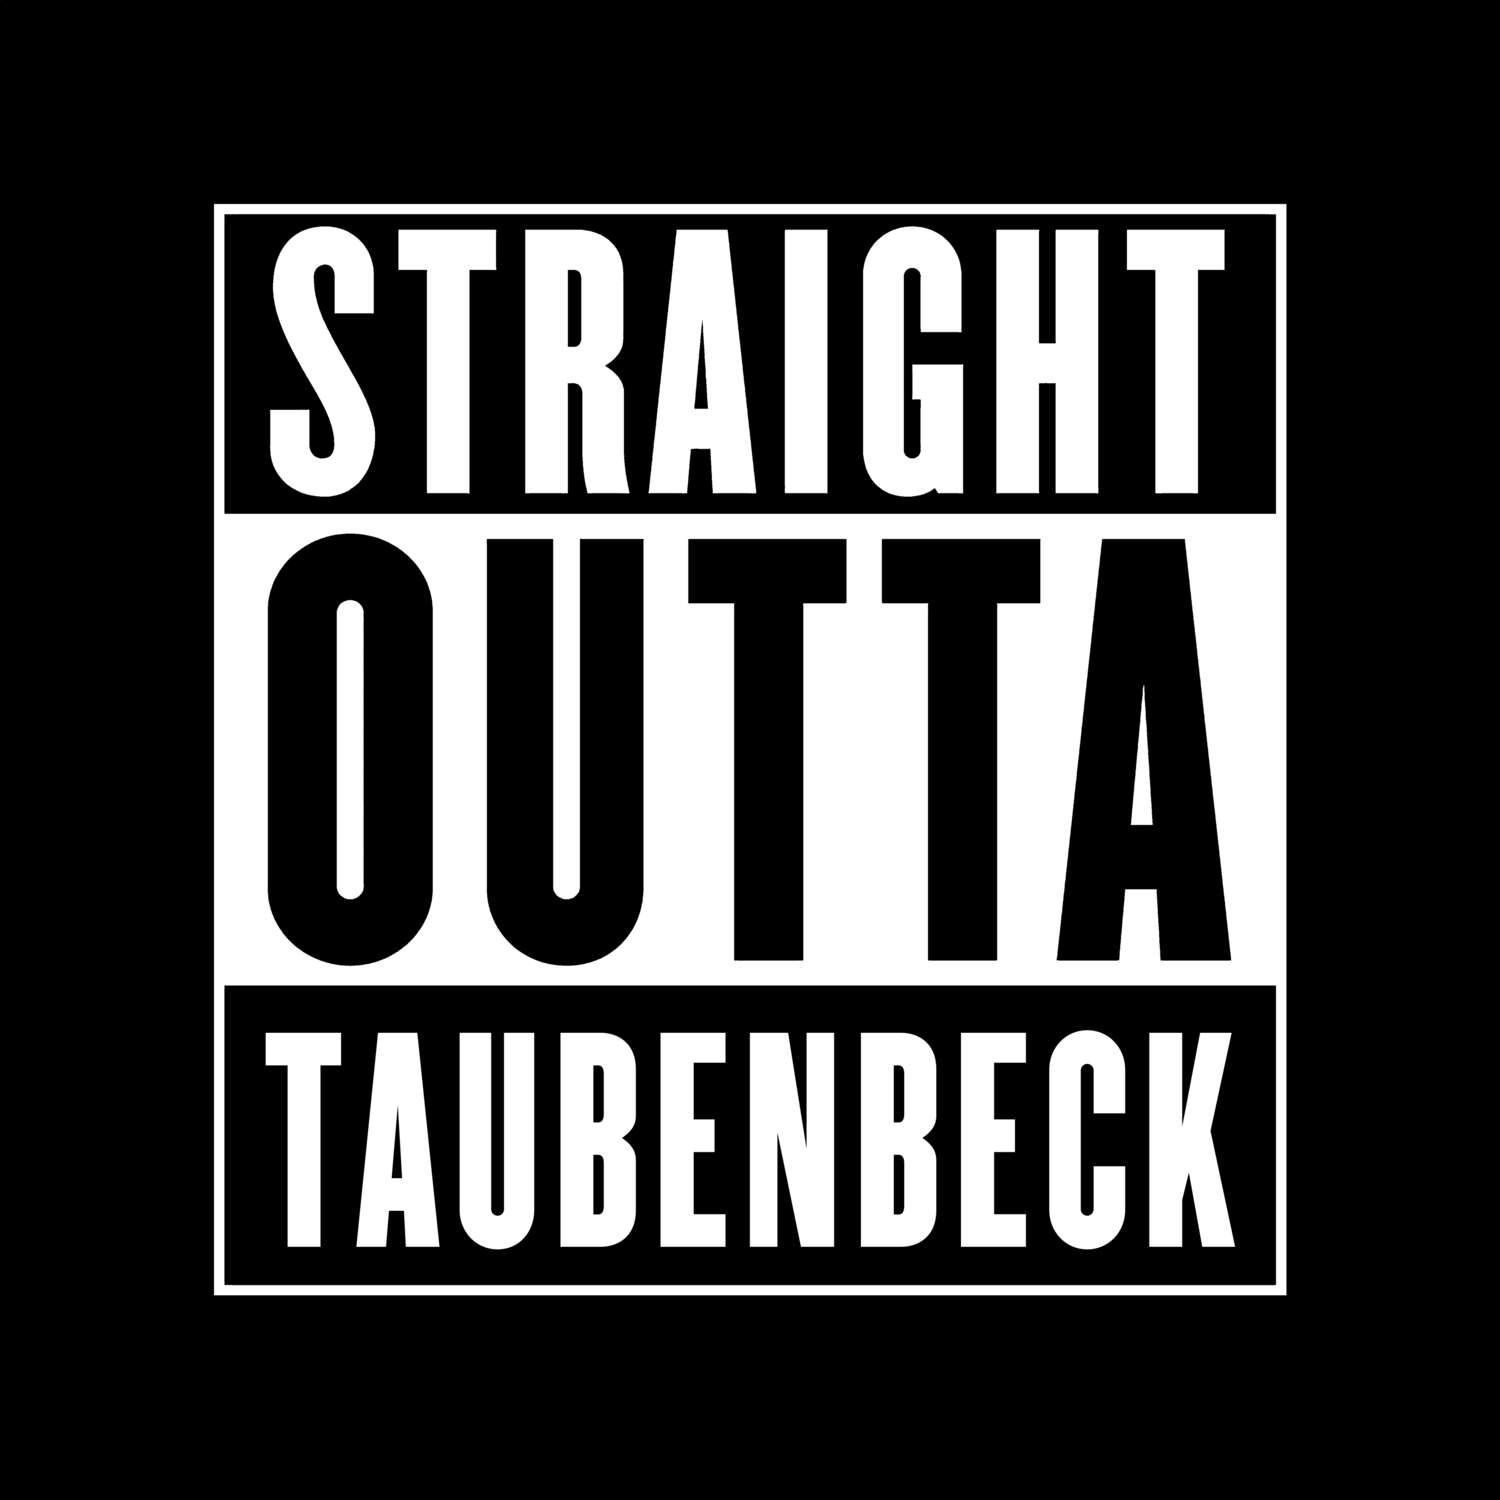 Taubenbeck T-Shirt »Straight Outta«